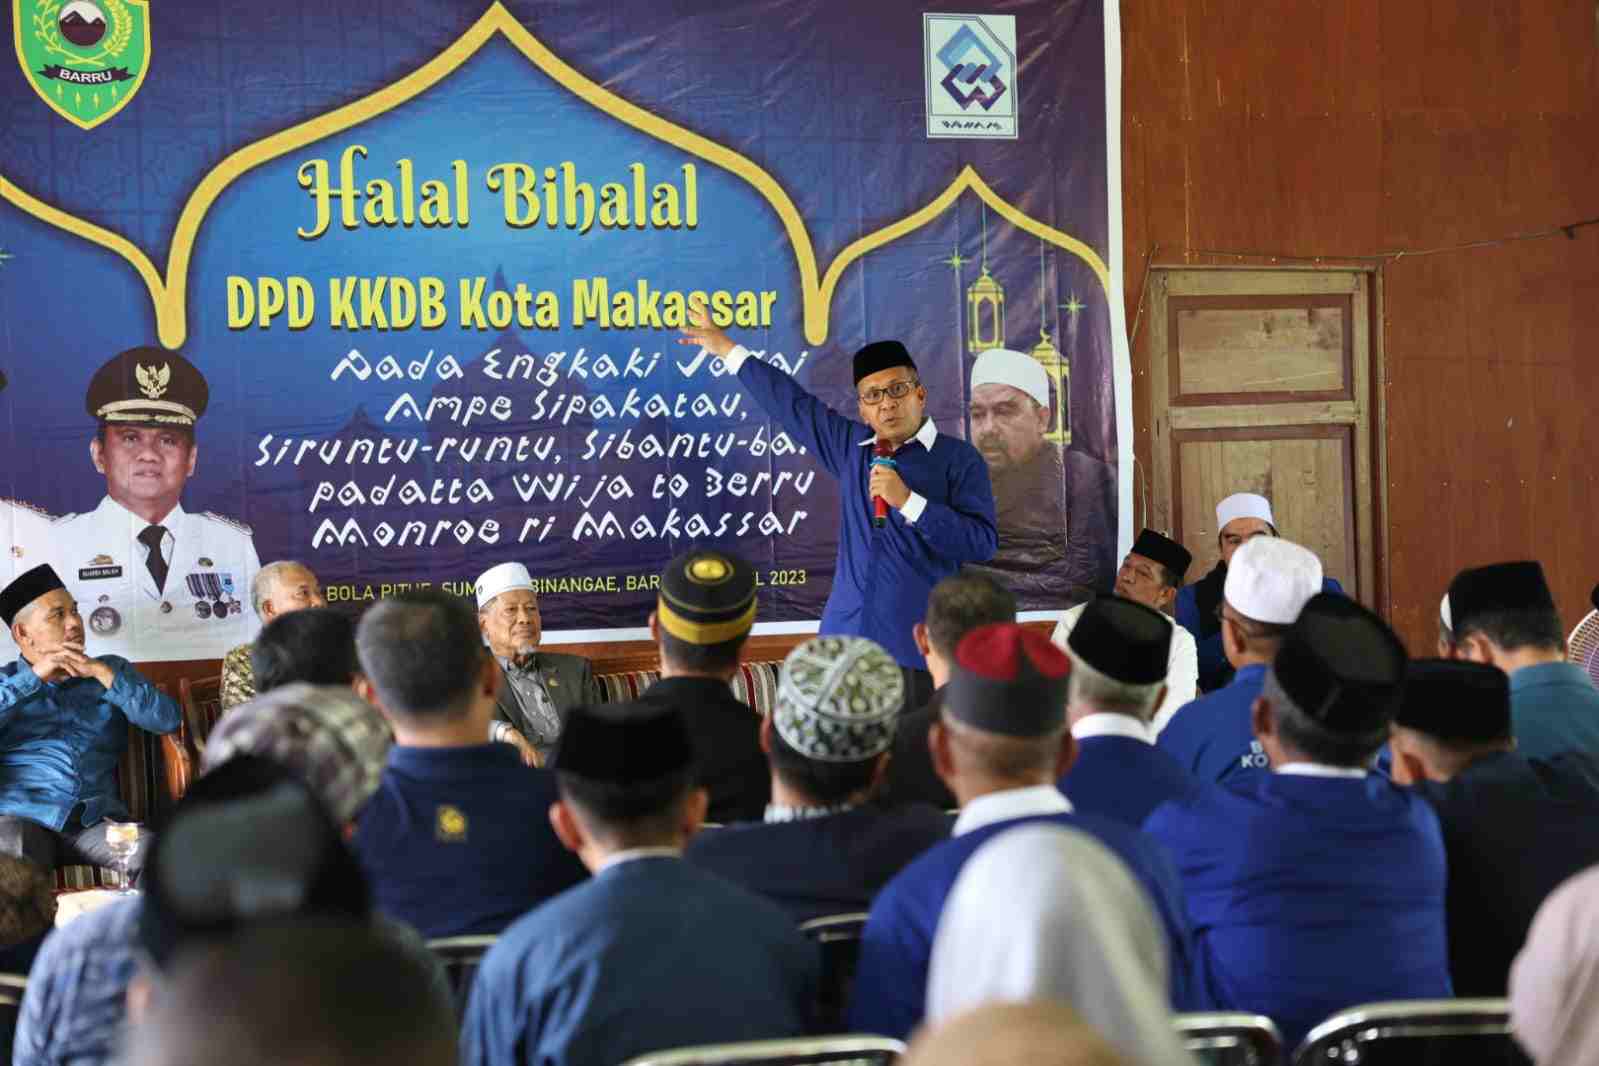 Halal Bi Halal Kerukunan Keluarga Daerah Barru (KKDB) Kota Makassar